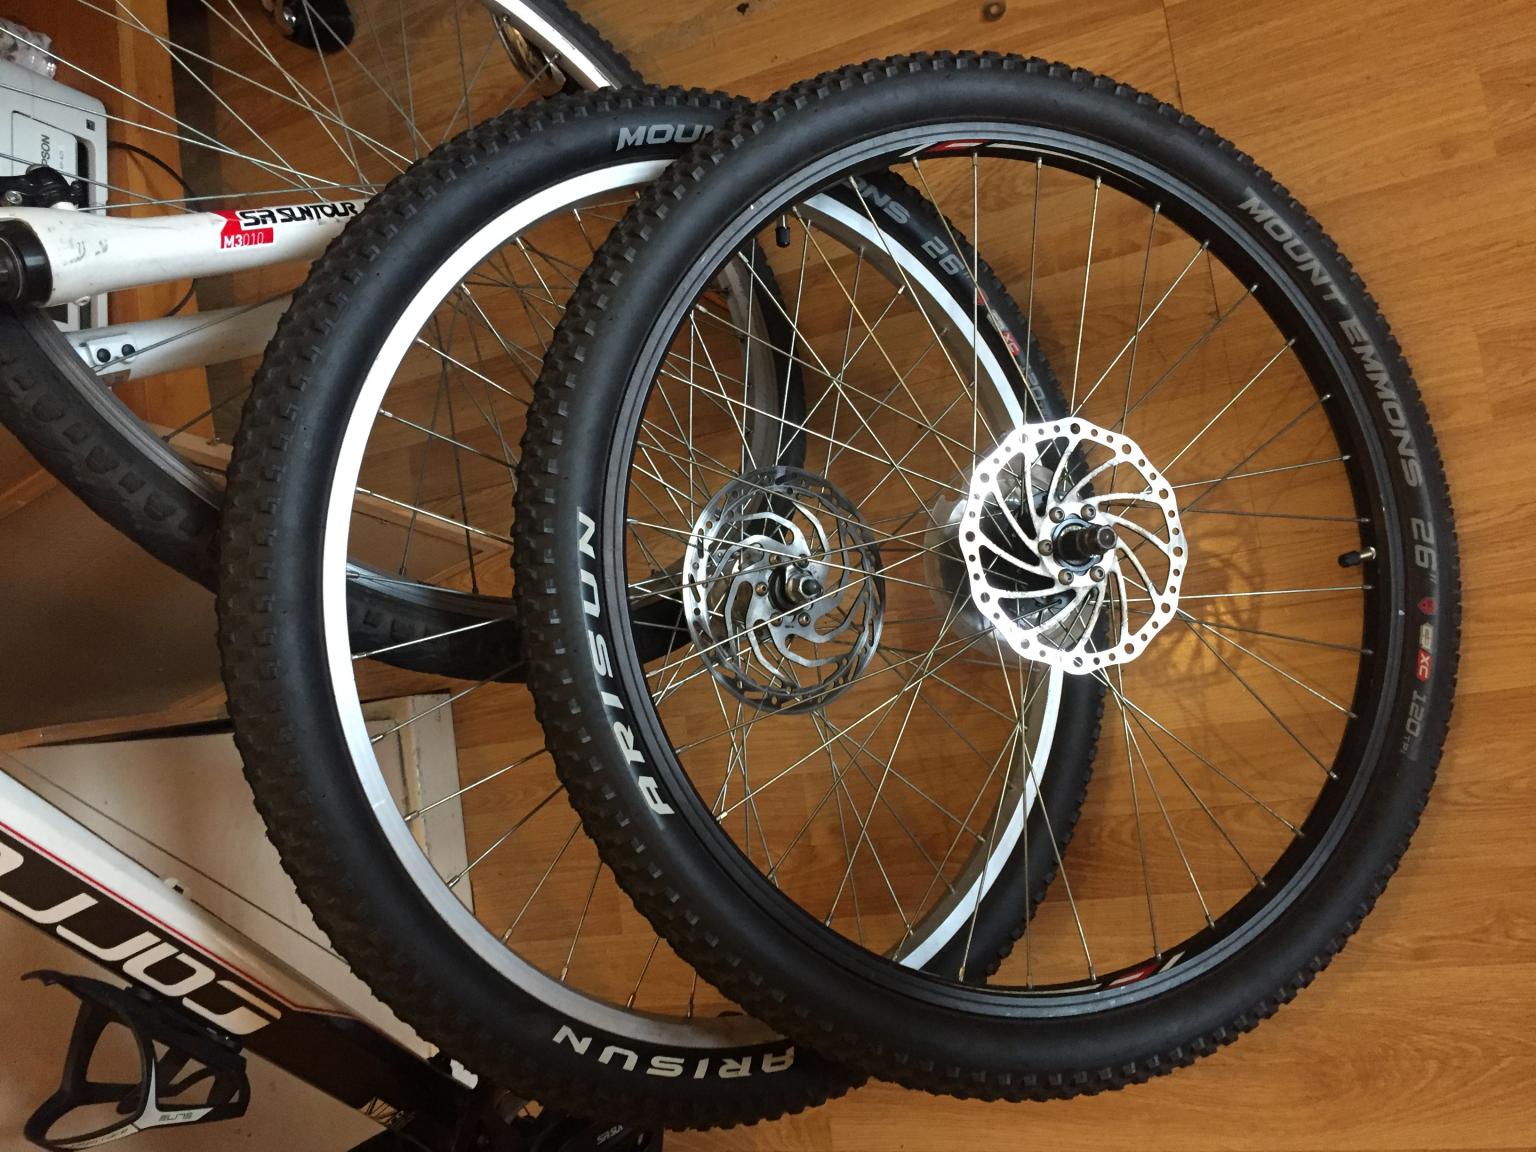 Arisun Unisex Mount Emmons Bicycle Tyres